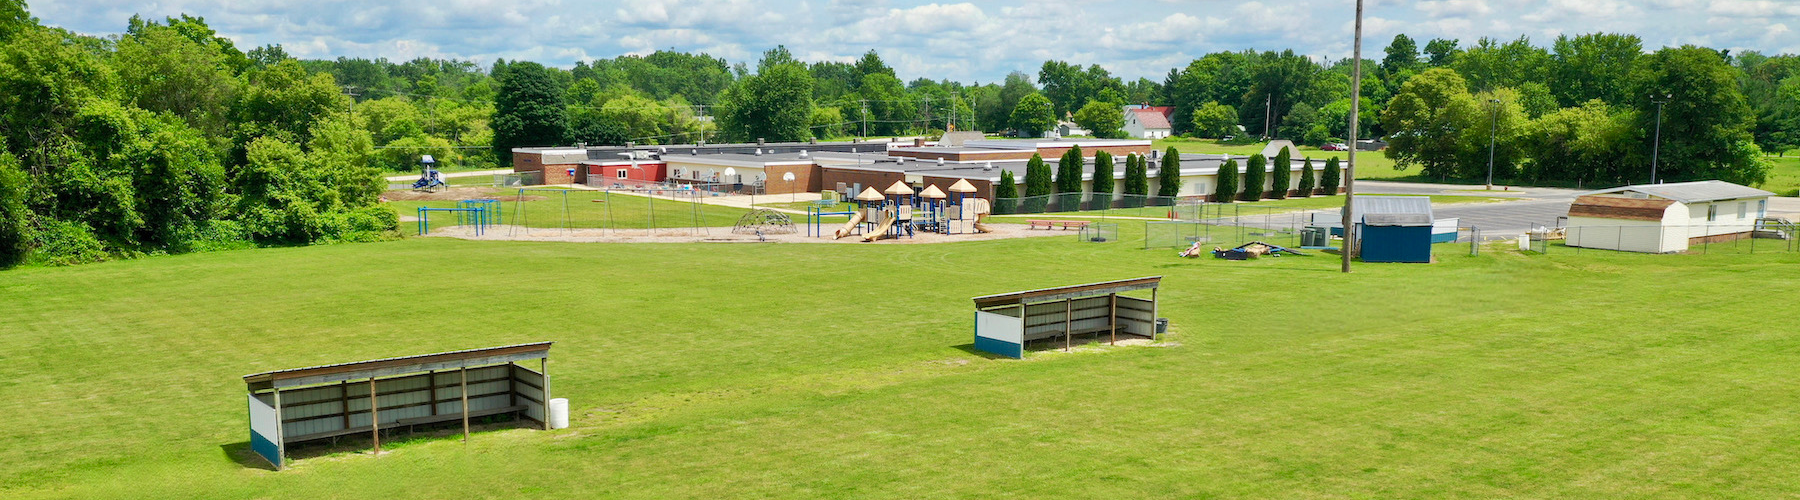 Fuller Street Elementary School - Playground